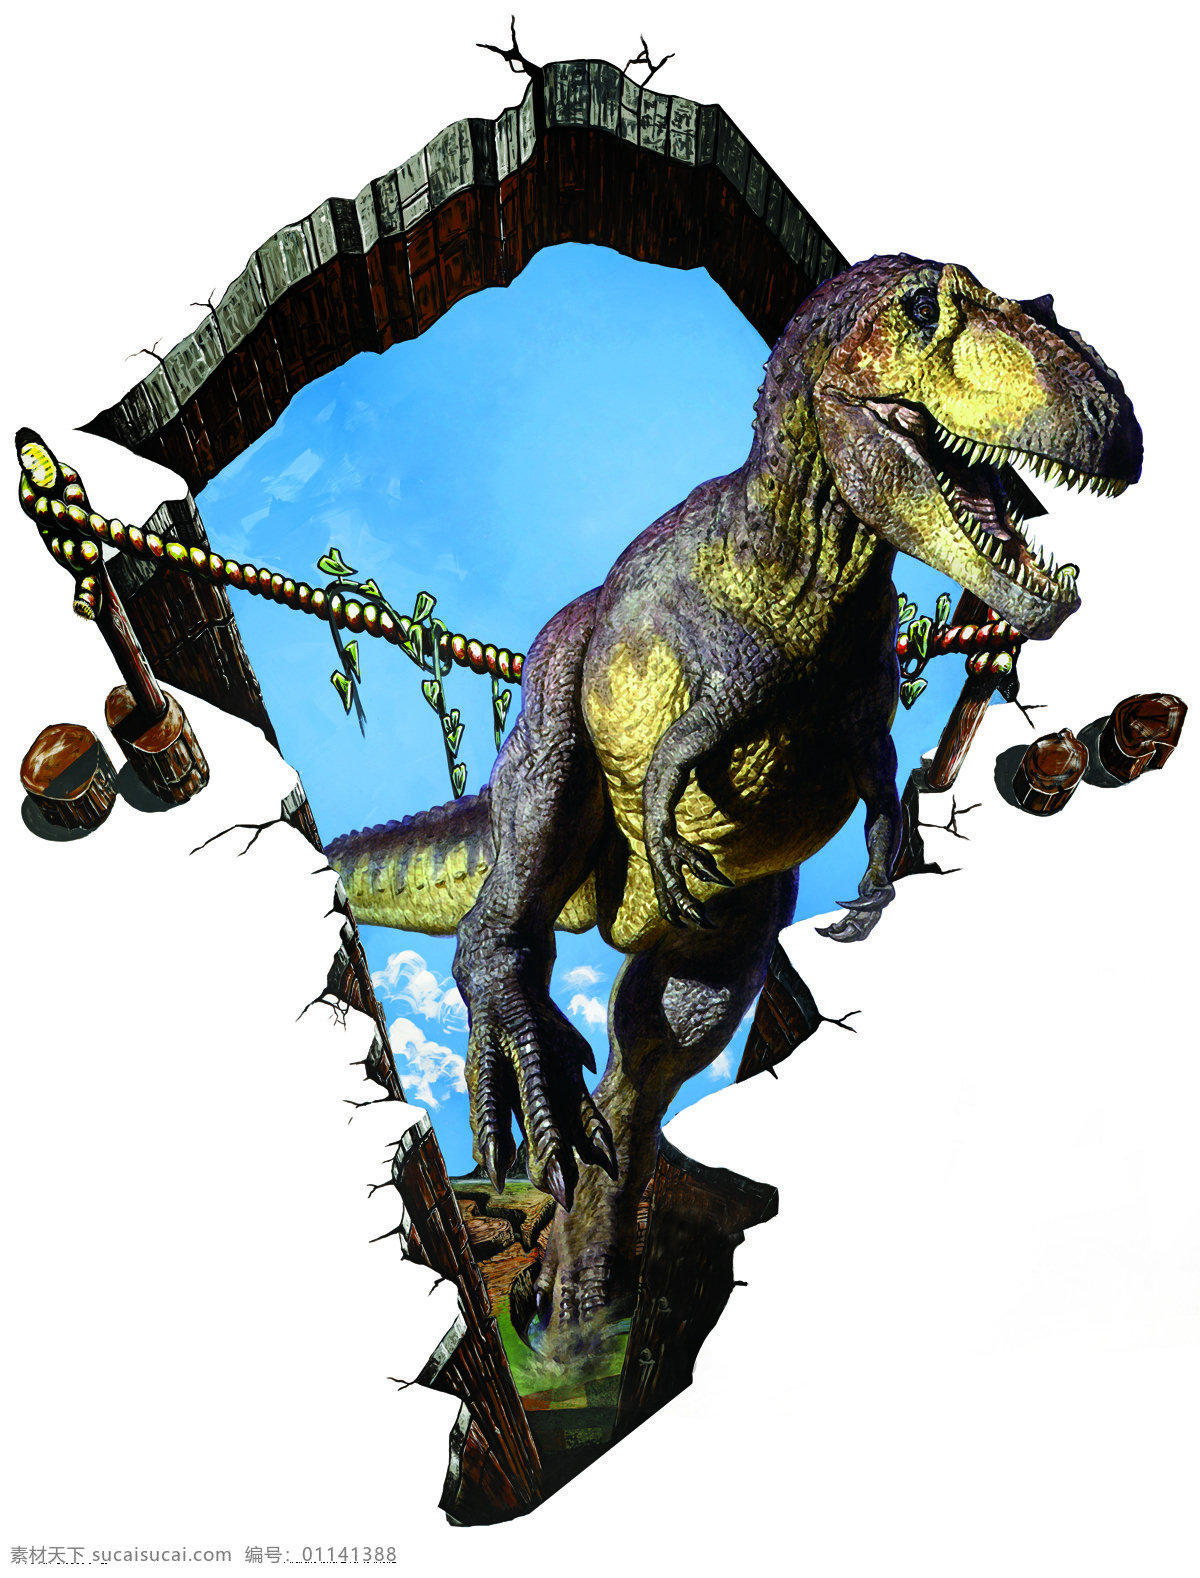 3d 动漫 侏罗纪 恐龙 背景 墙 背景墙 3d渲染 3d模型 效果图